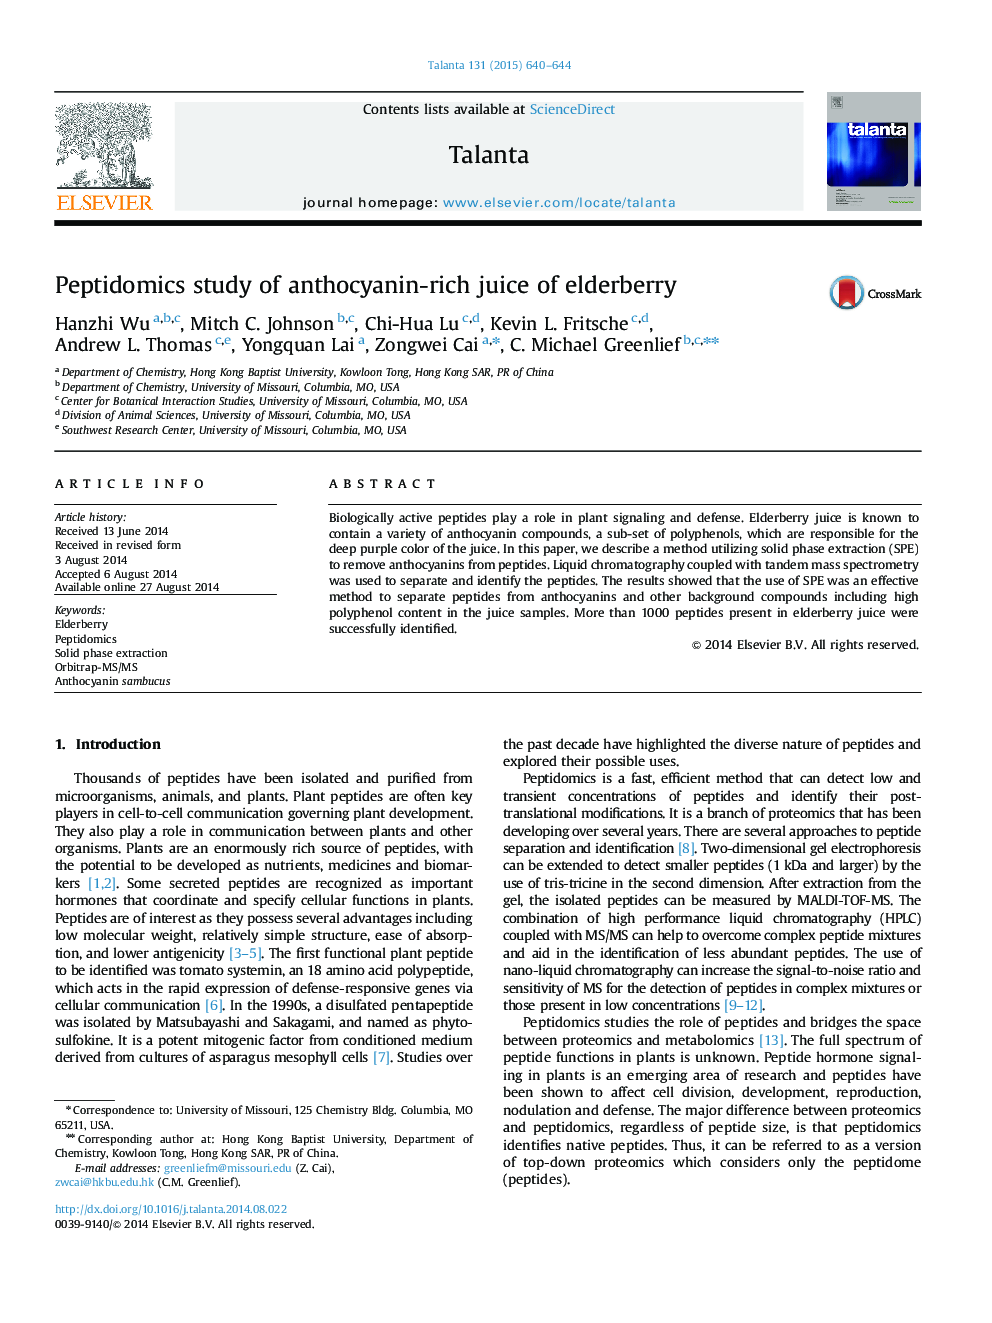 Peptidomics study of anthocyanin-rich juice of elderberry